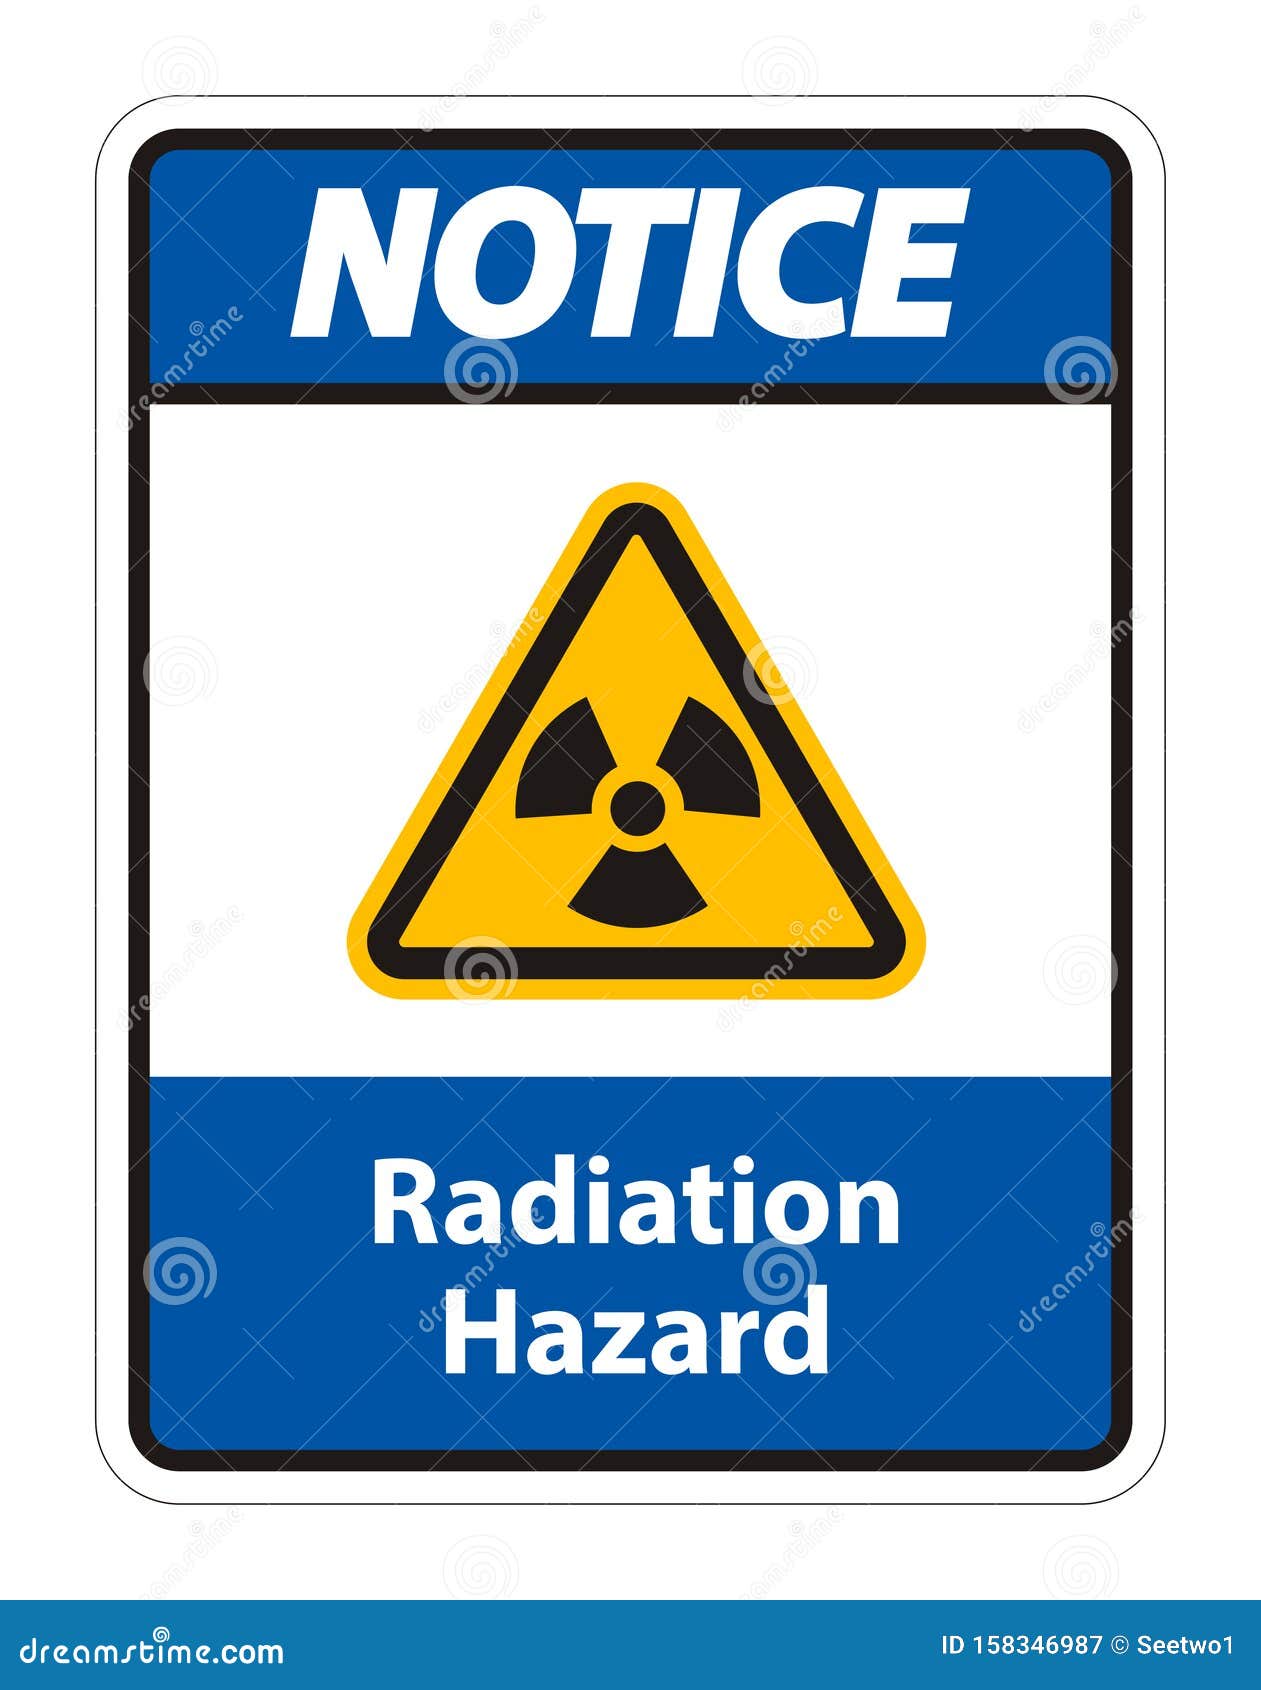 Radiation Hazard Symbol Sign Isolate on White Background,Vector ...